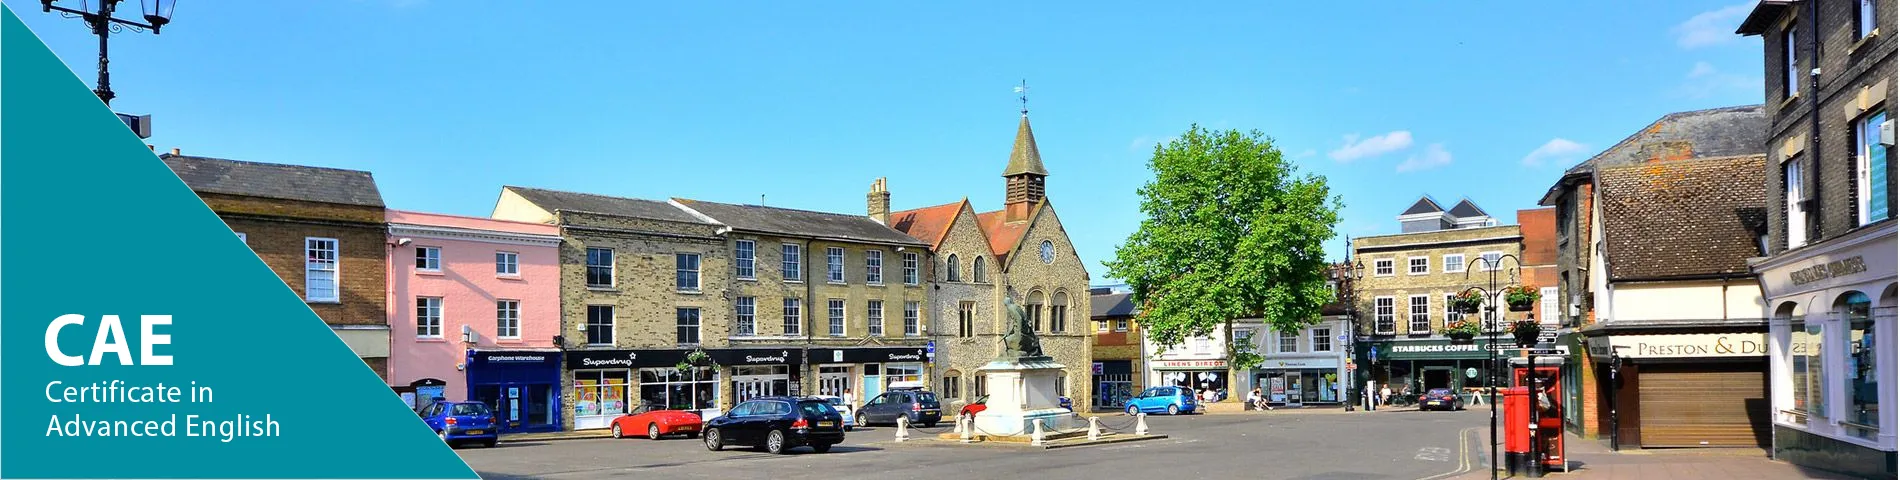 Bury St Edmunds - Cambridge - pokročilý